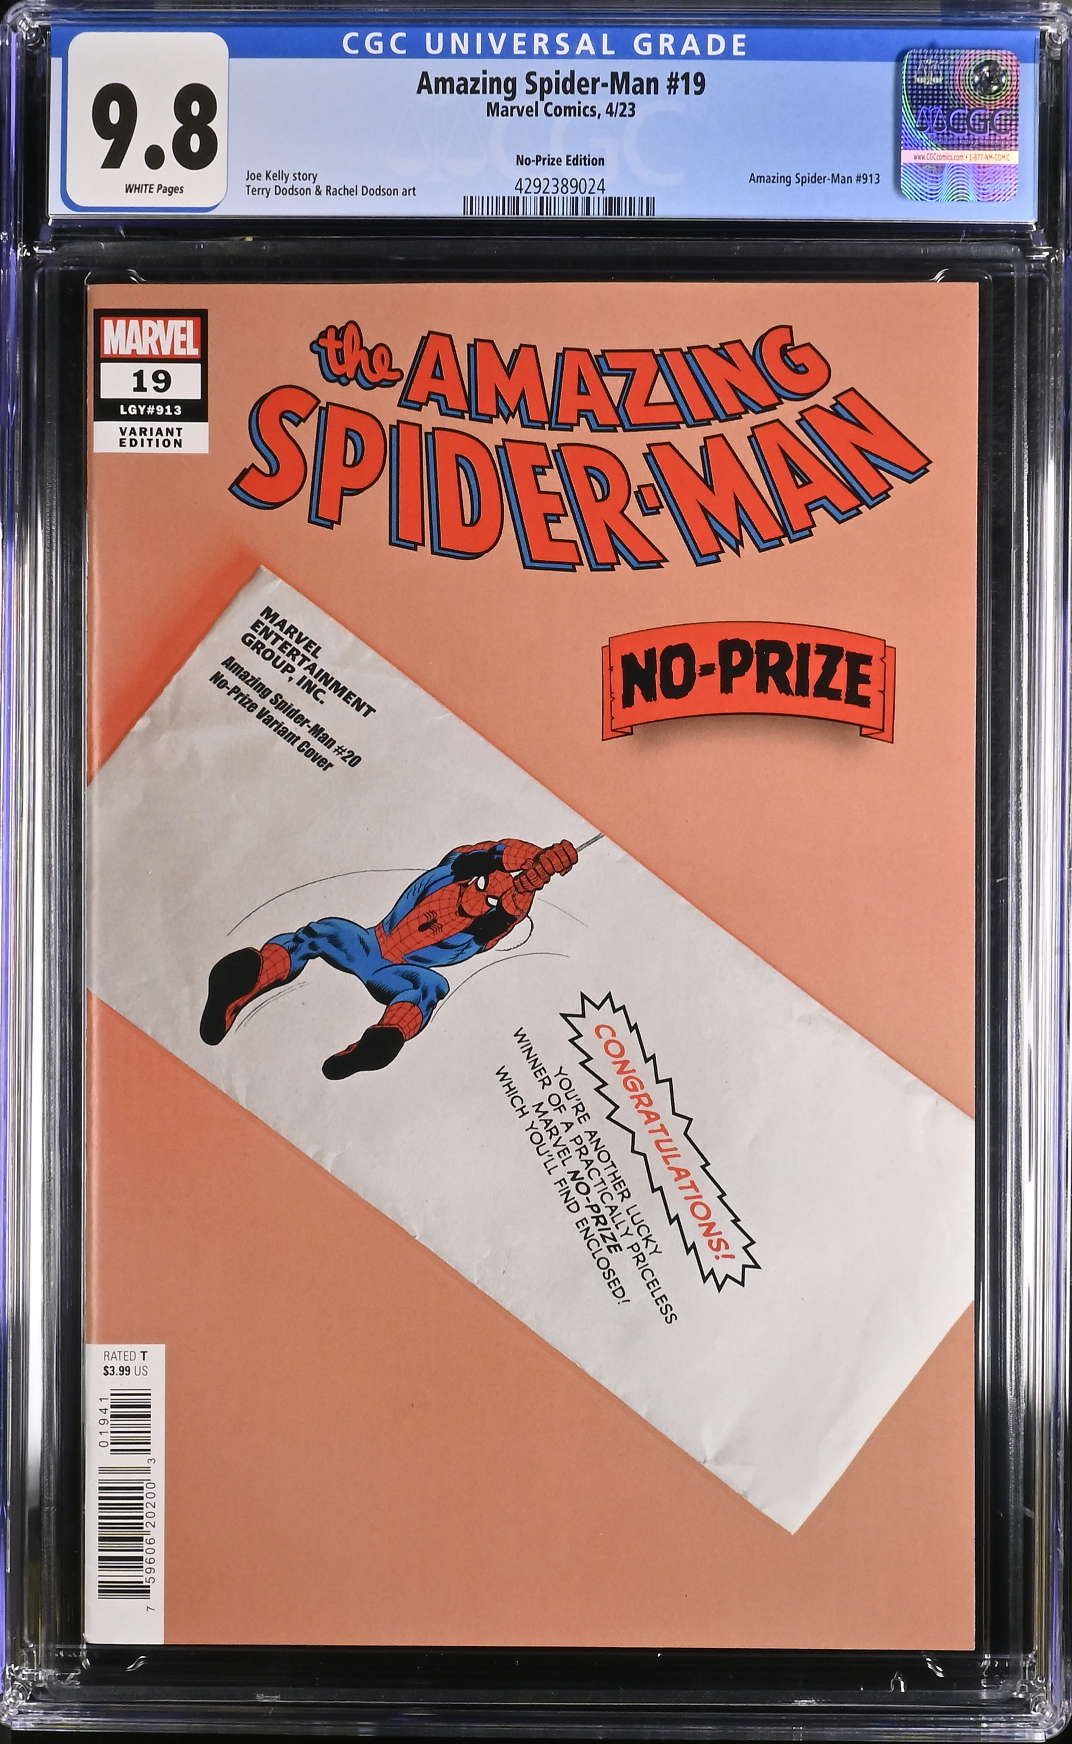 Amazing Spider-Man #19 "No-Prize" Variant CGC 9.8